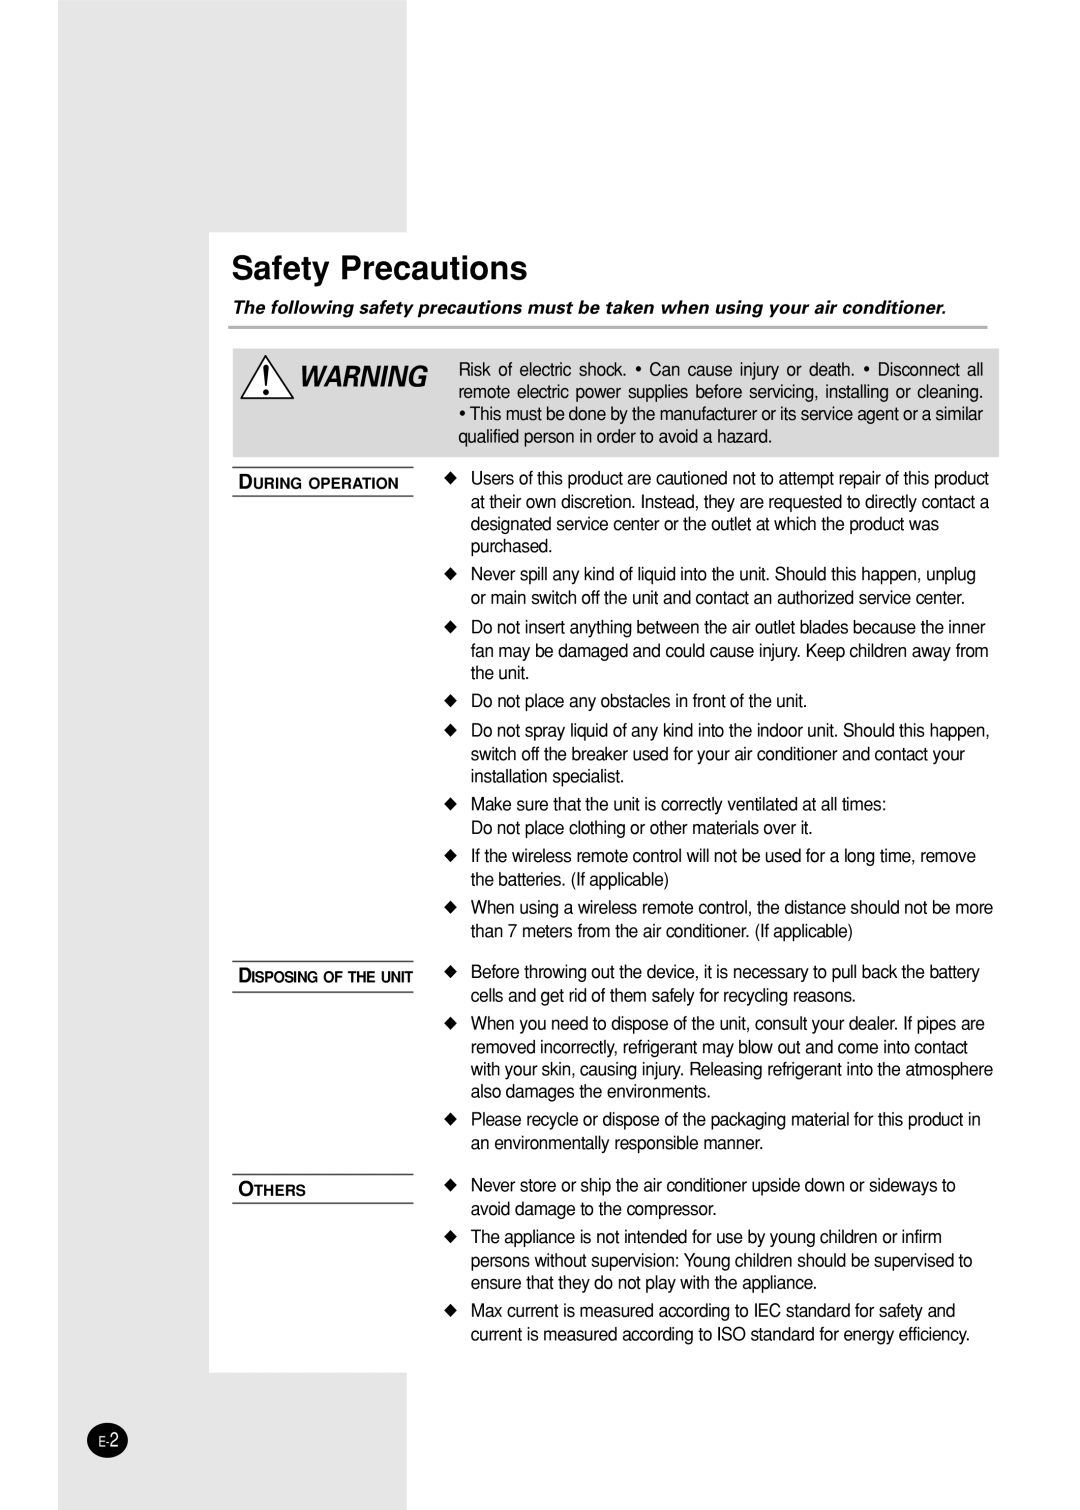 Samsung SH12BPHX, SH09BPHX manuel dutilisation Safety Precautions 